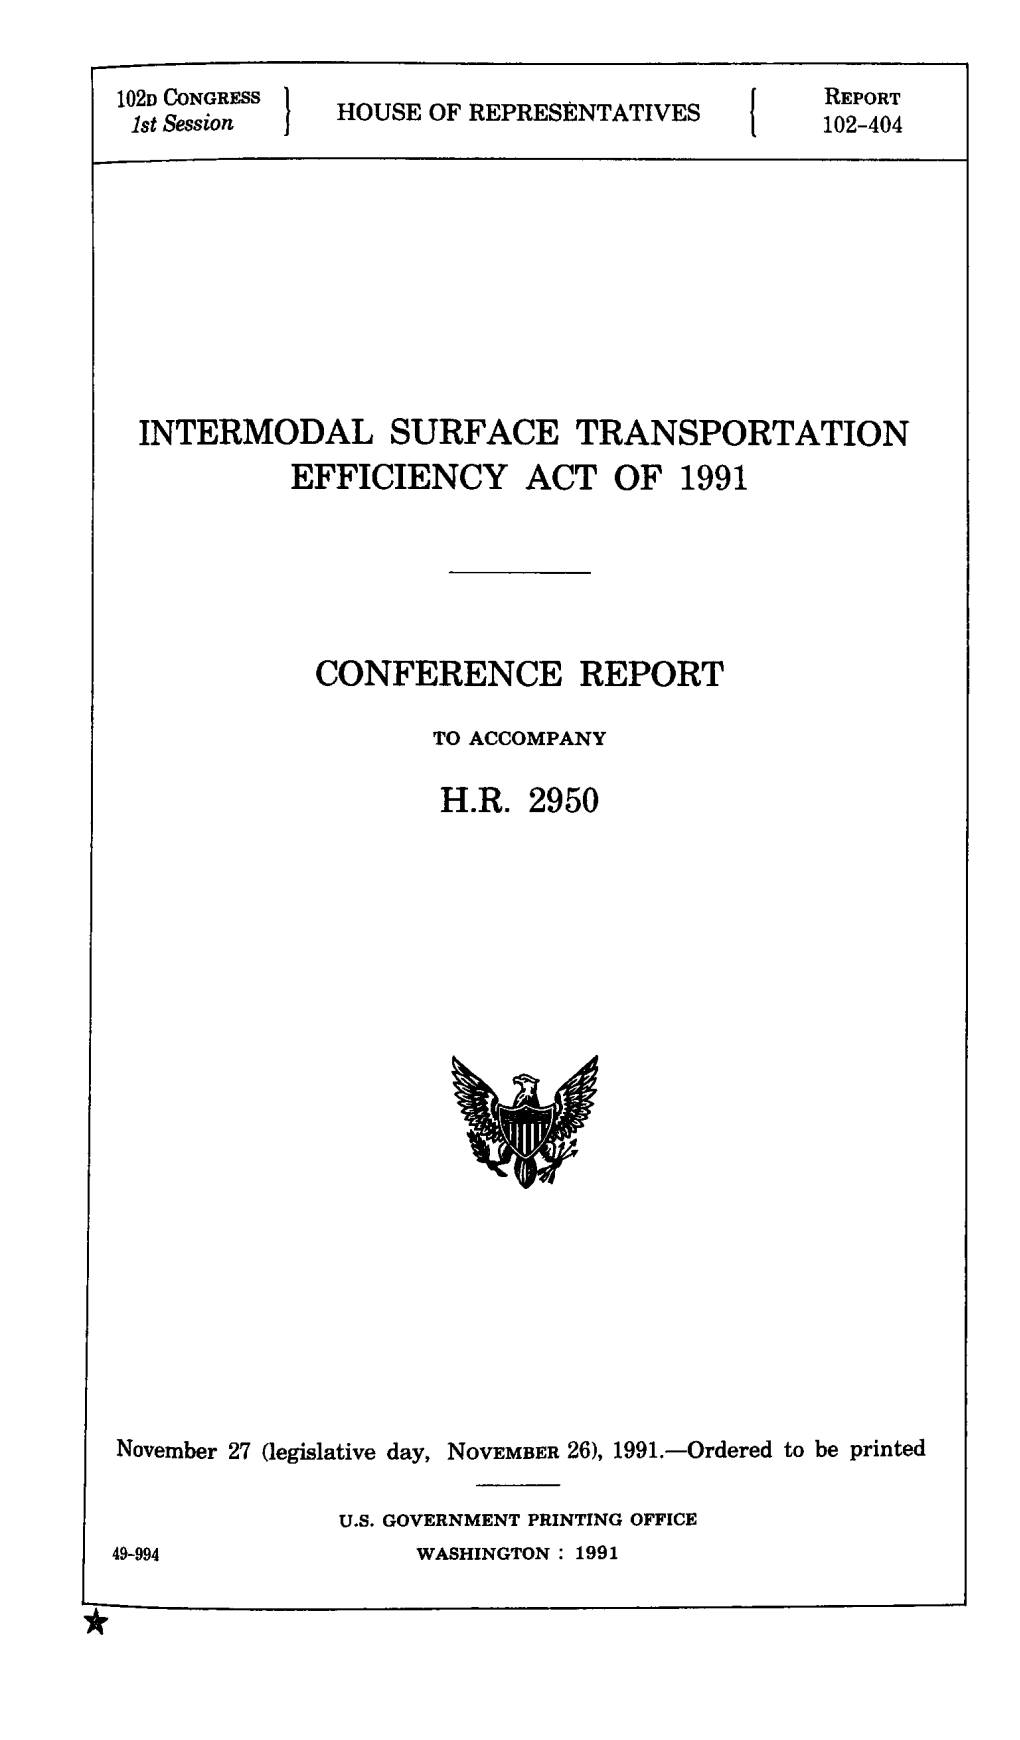 Intermodal Surface Transportation Efficiency Act of 1991